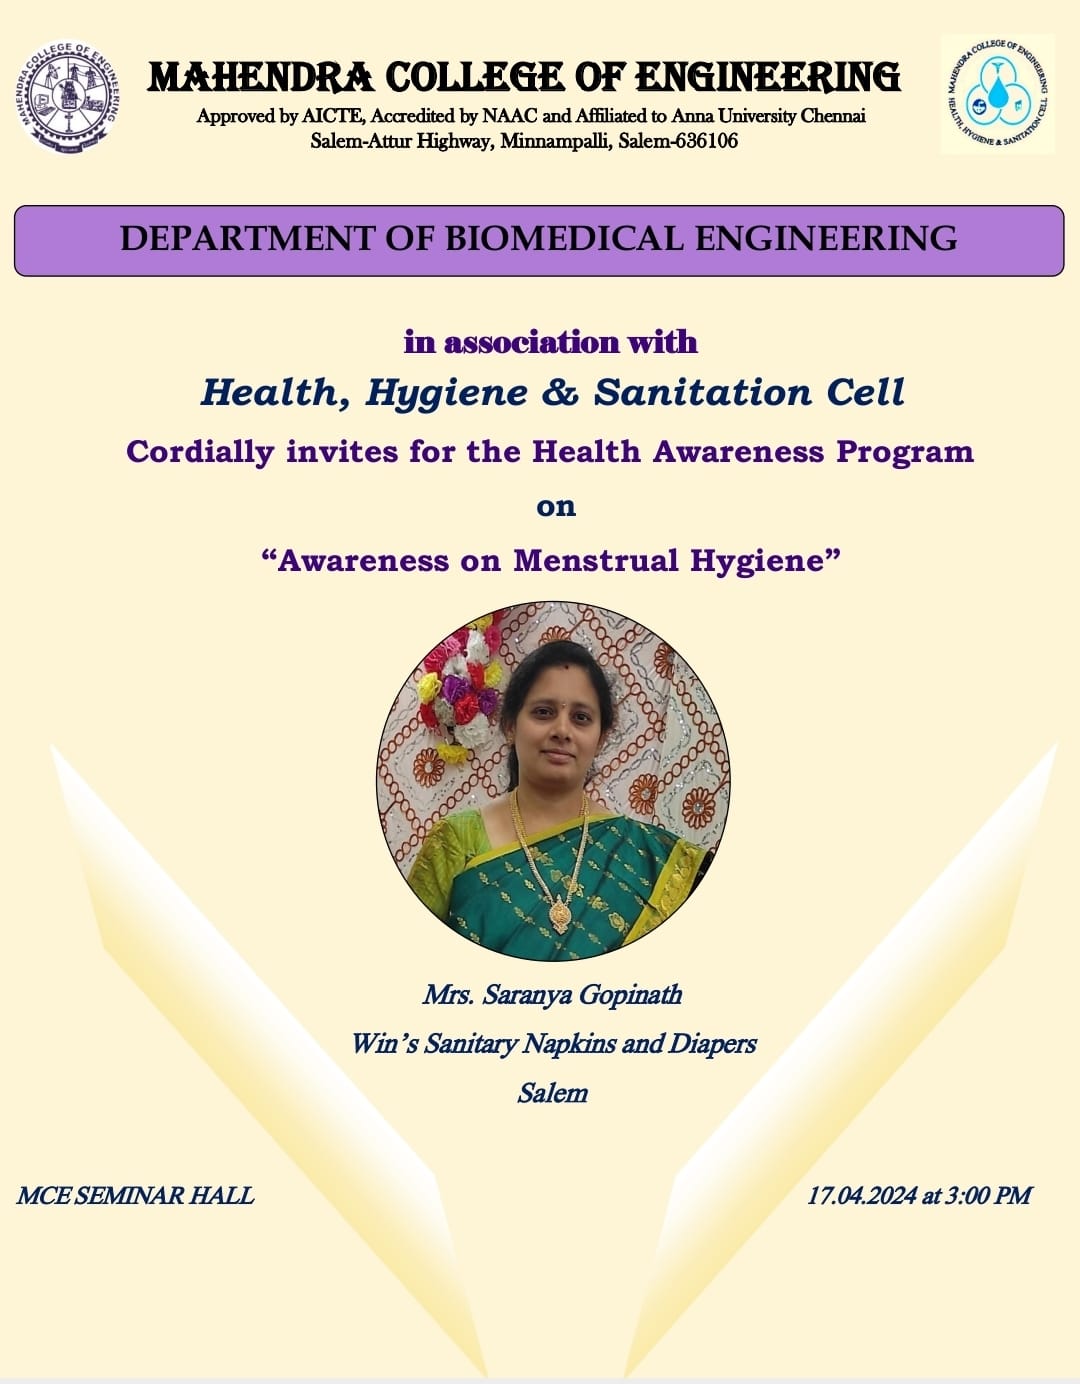 BioMedical - Health, Hygiene & Sanitation Cell